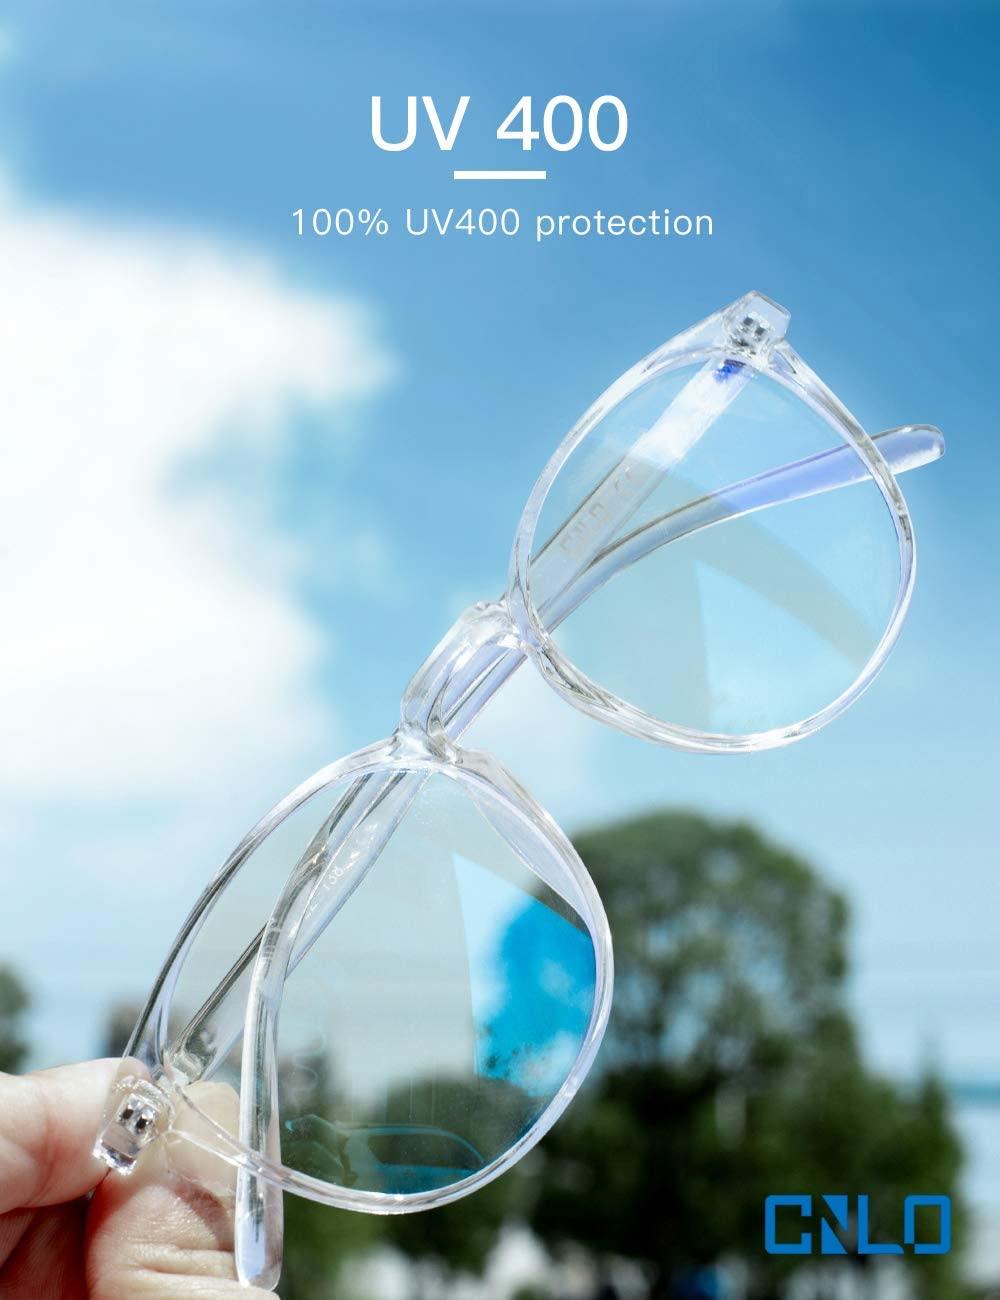 Blue Light Glasses, Digital Protection